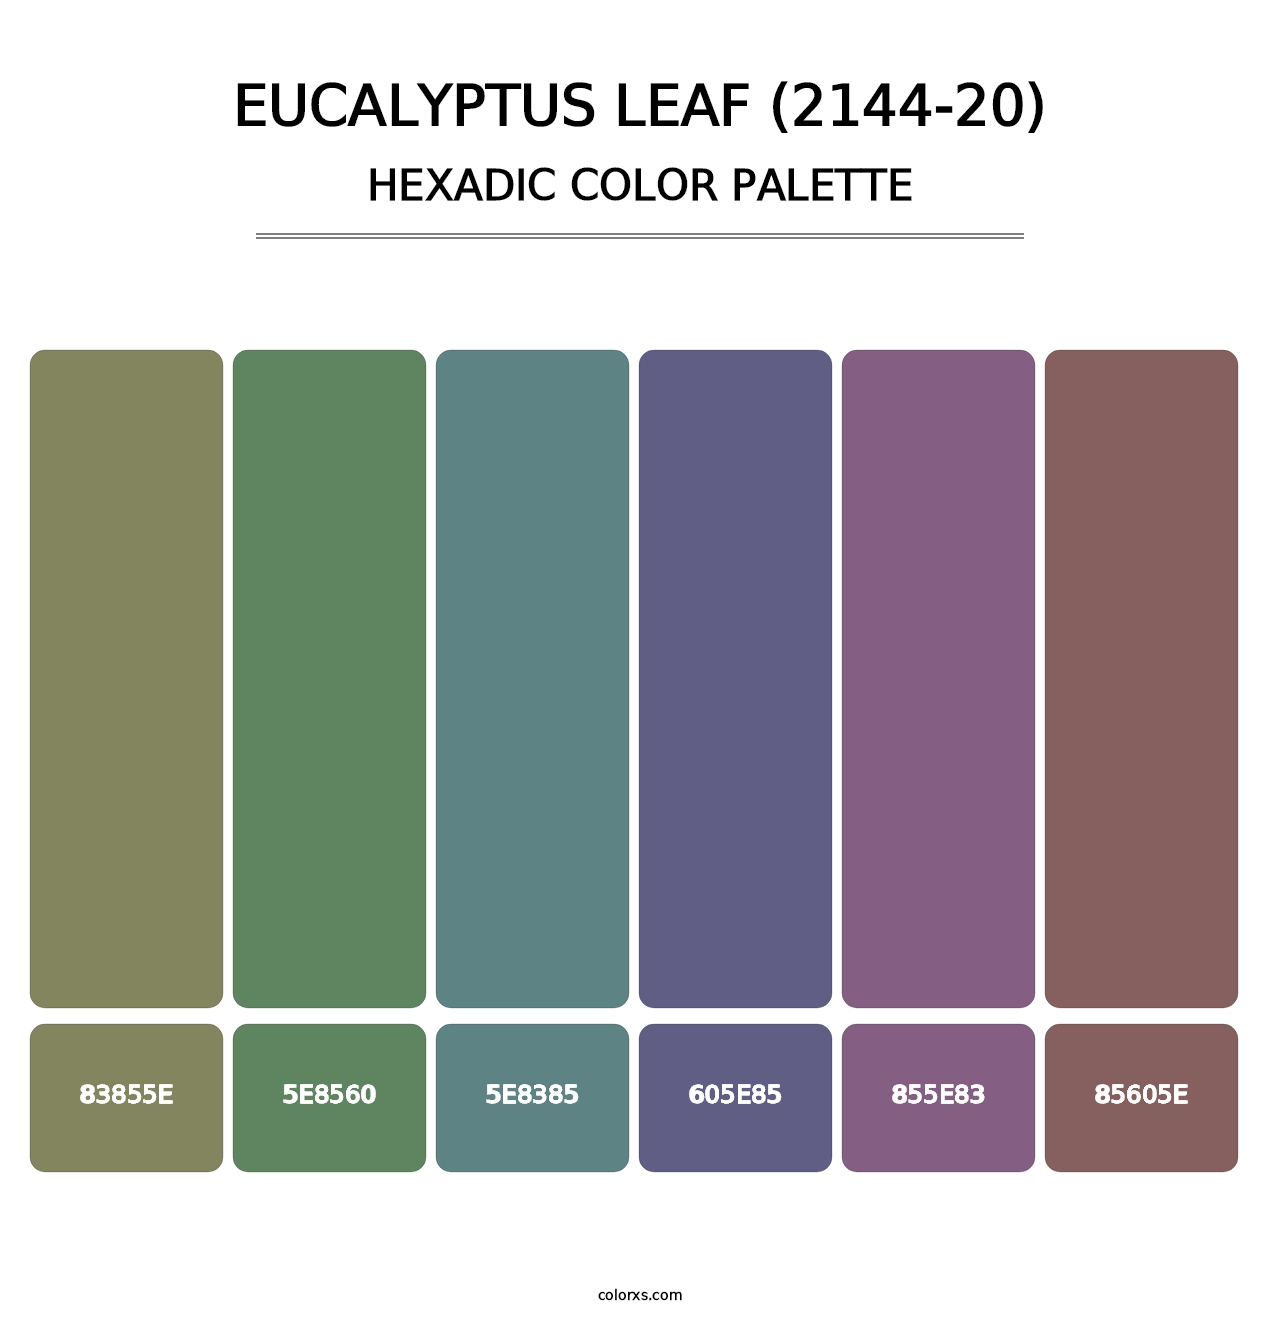 Eucalyptus Leaf (2144-20) - Hexadic Color Palette